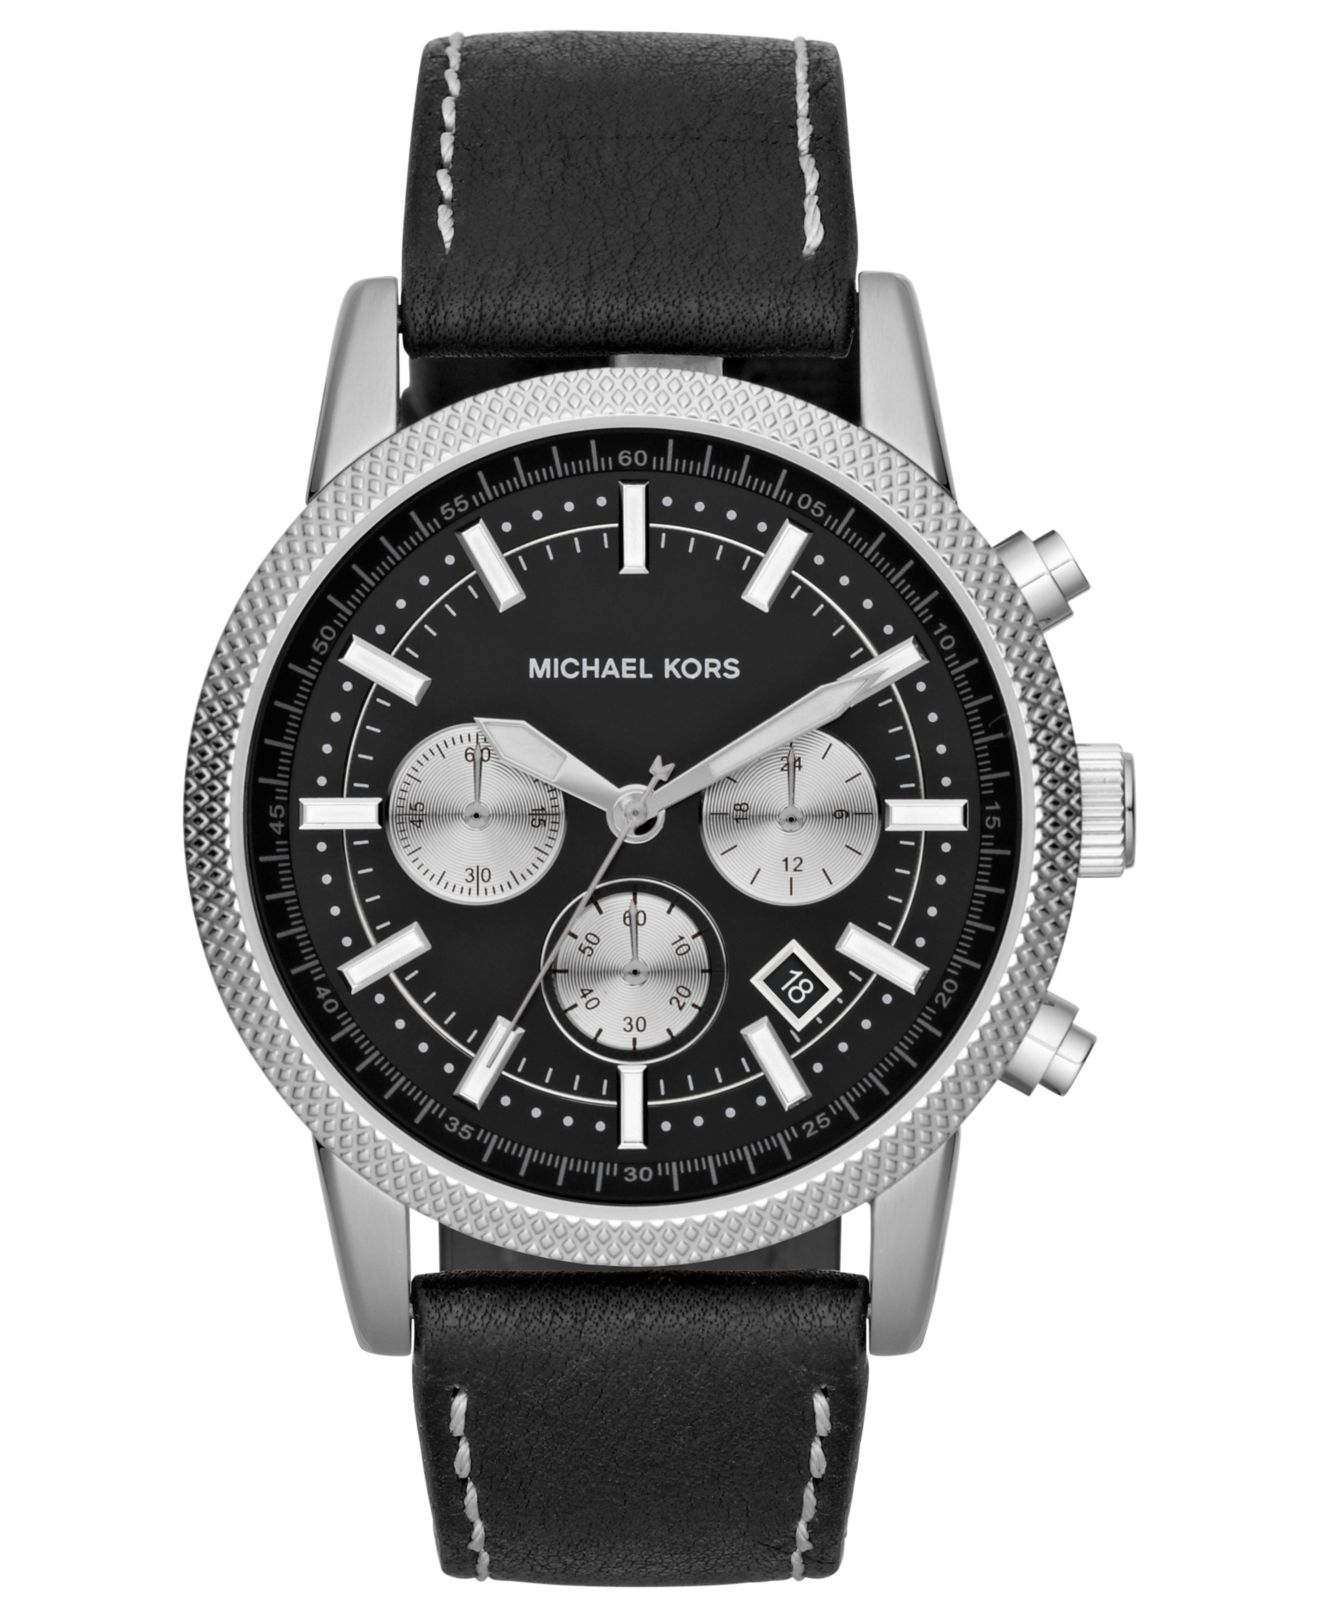 Lyst - Michael kors Men'S Chronograph Scout Black Leather Strap Watch ...